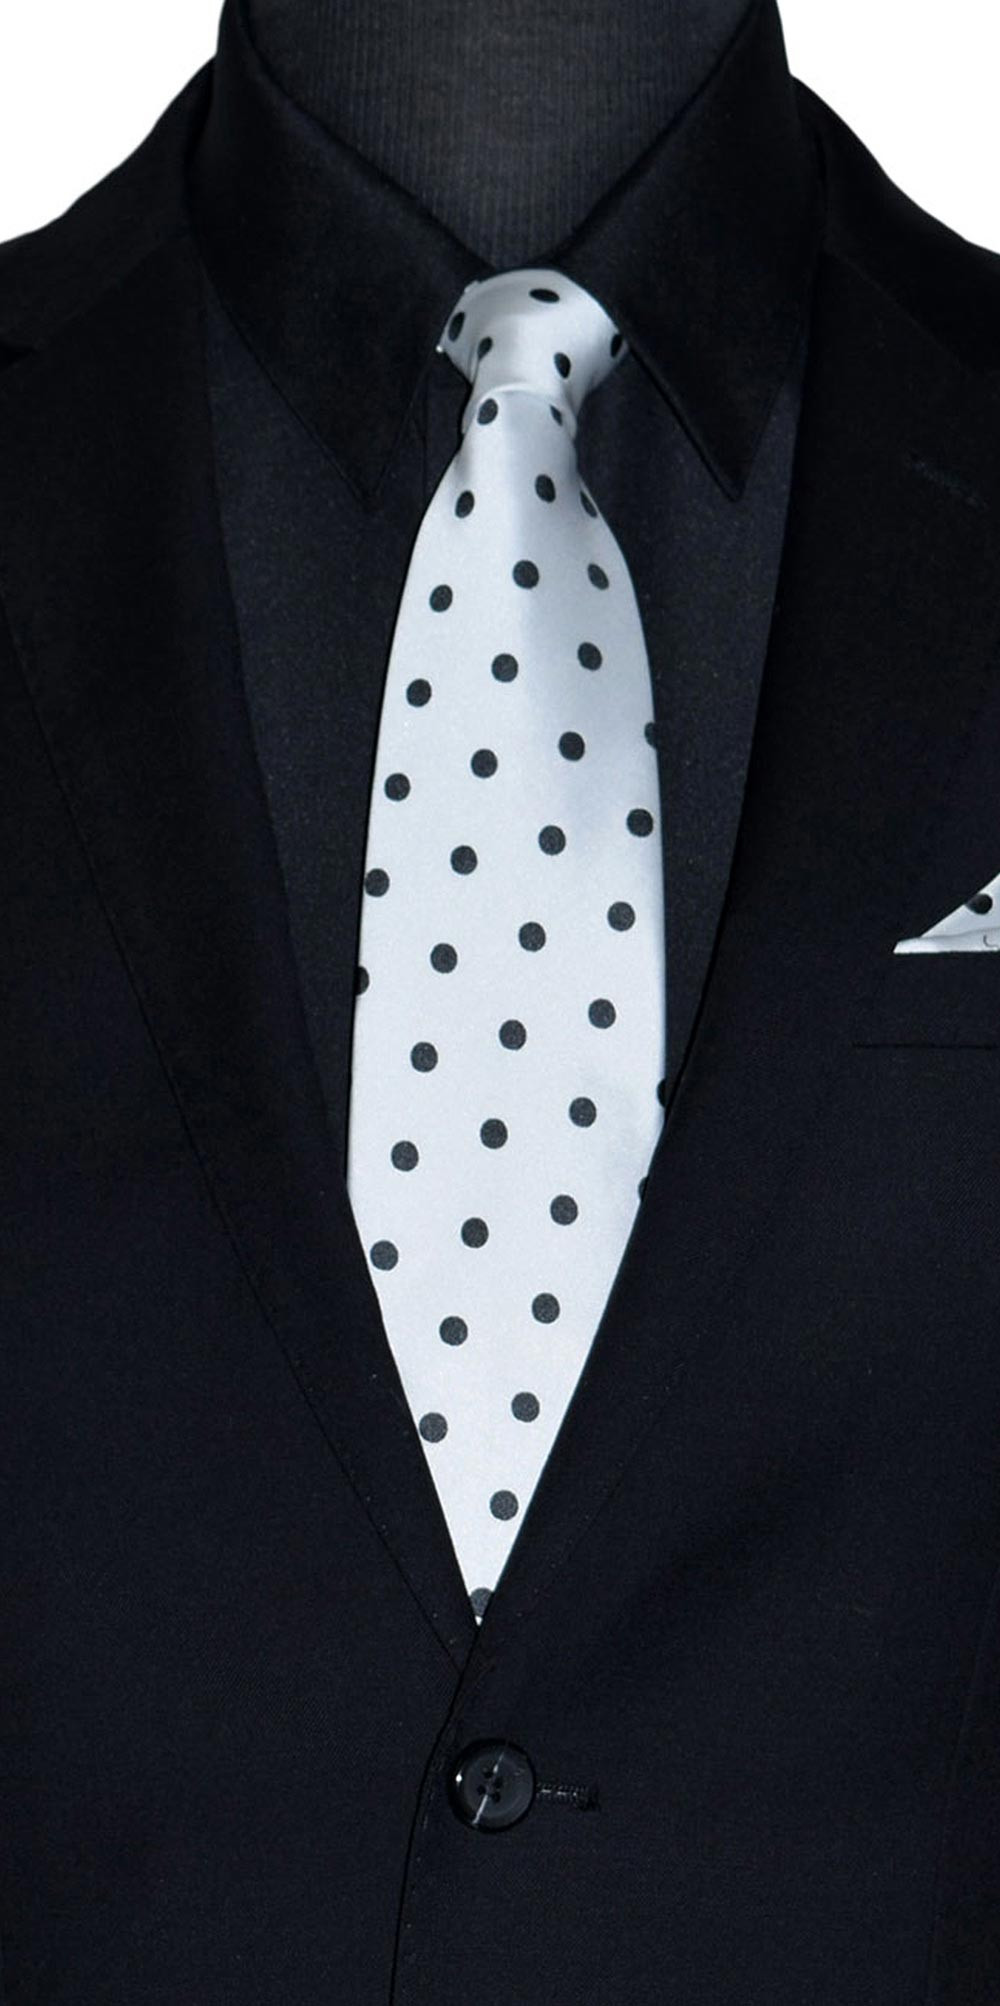 men's white dress tie with black polka dots